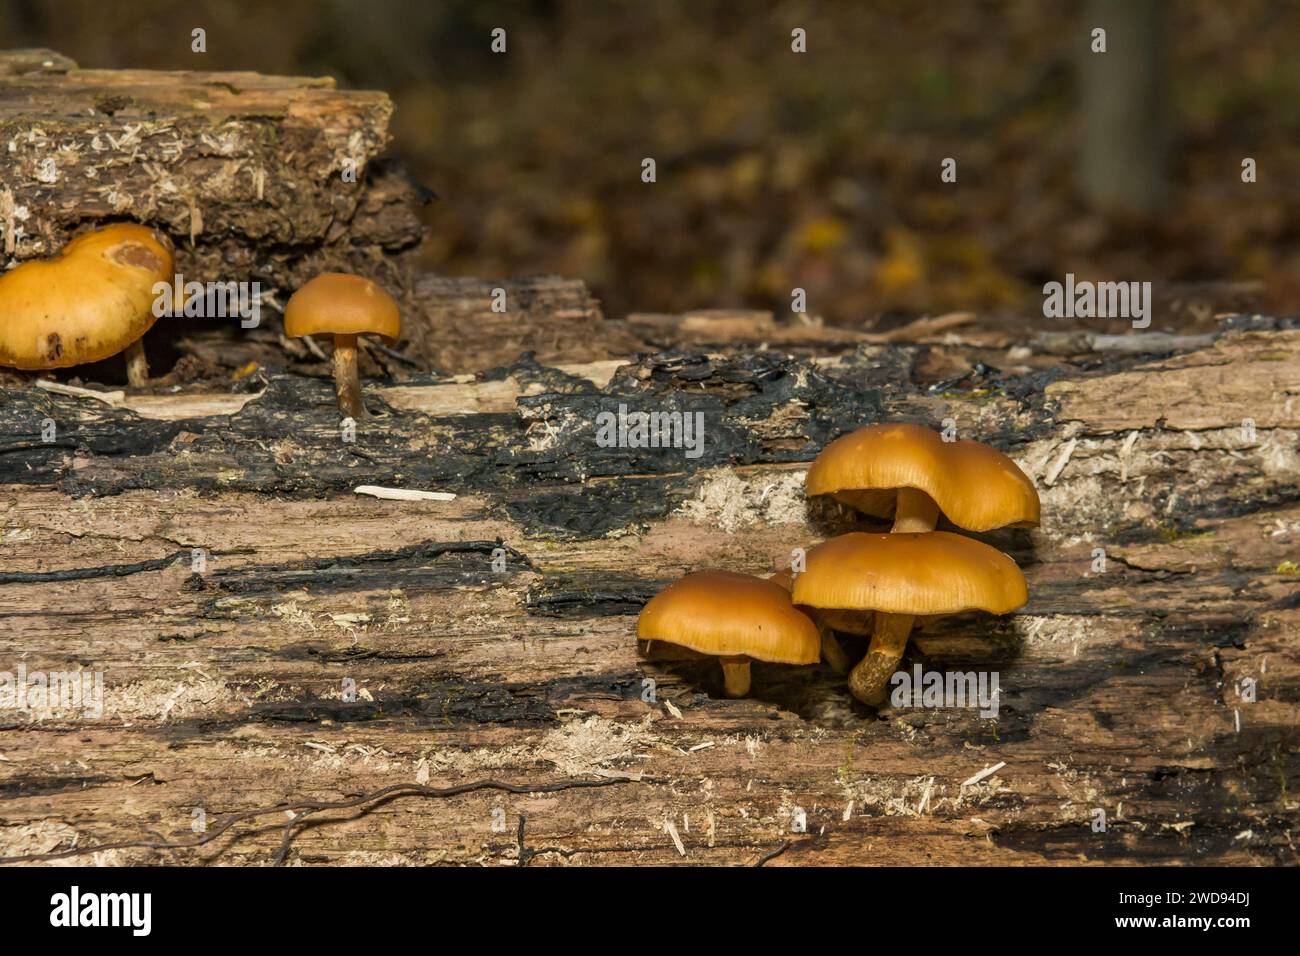 Funeral Bell Mushrooms - Galerina marginata Stock Photo